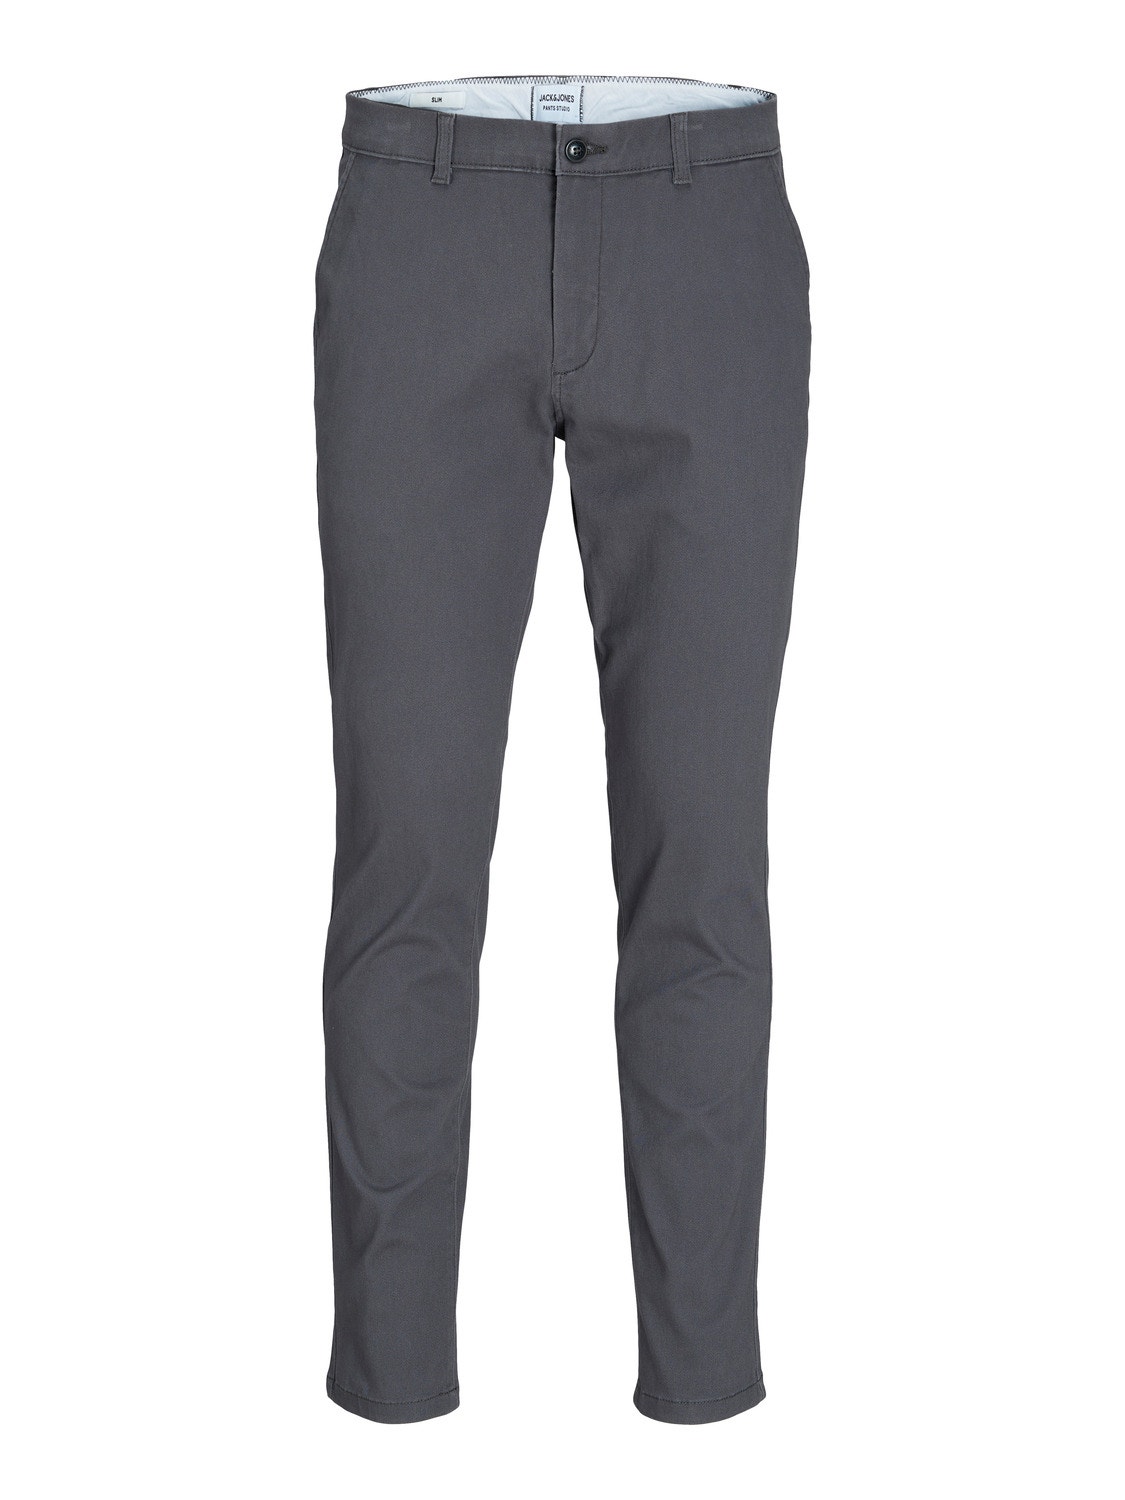 Jack & Jones Slim Fit Spodnie chino -Asphalt - 12174152